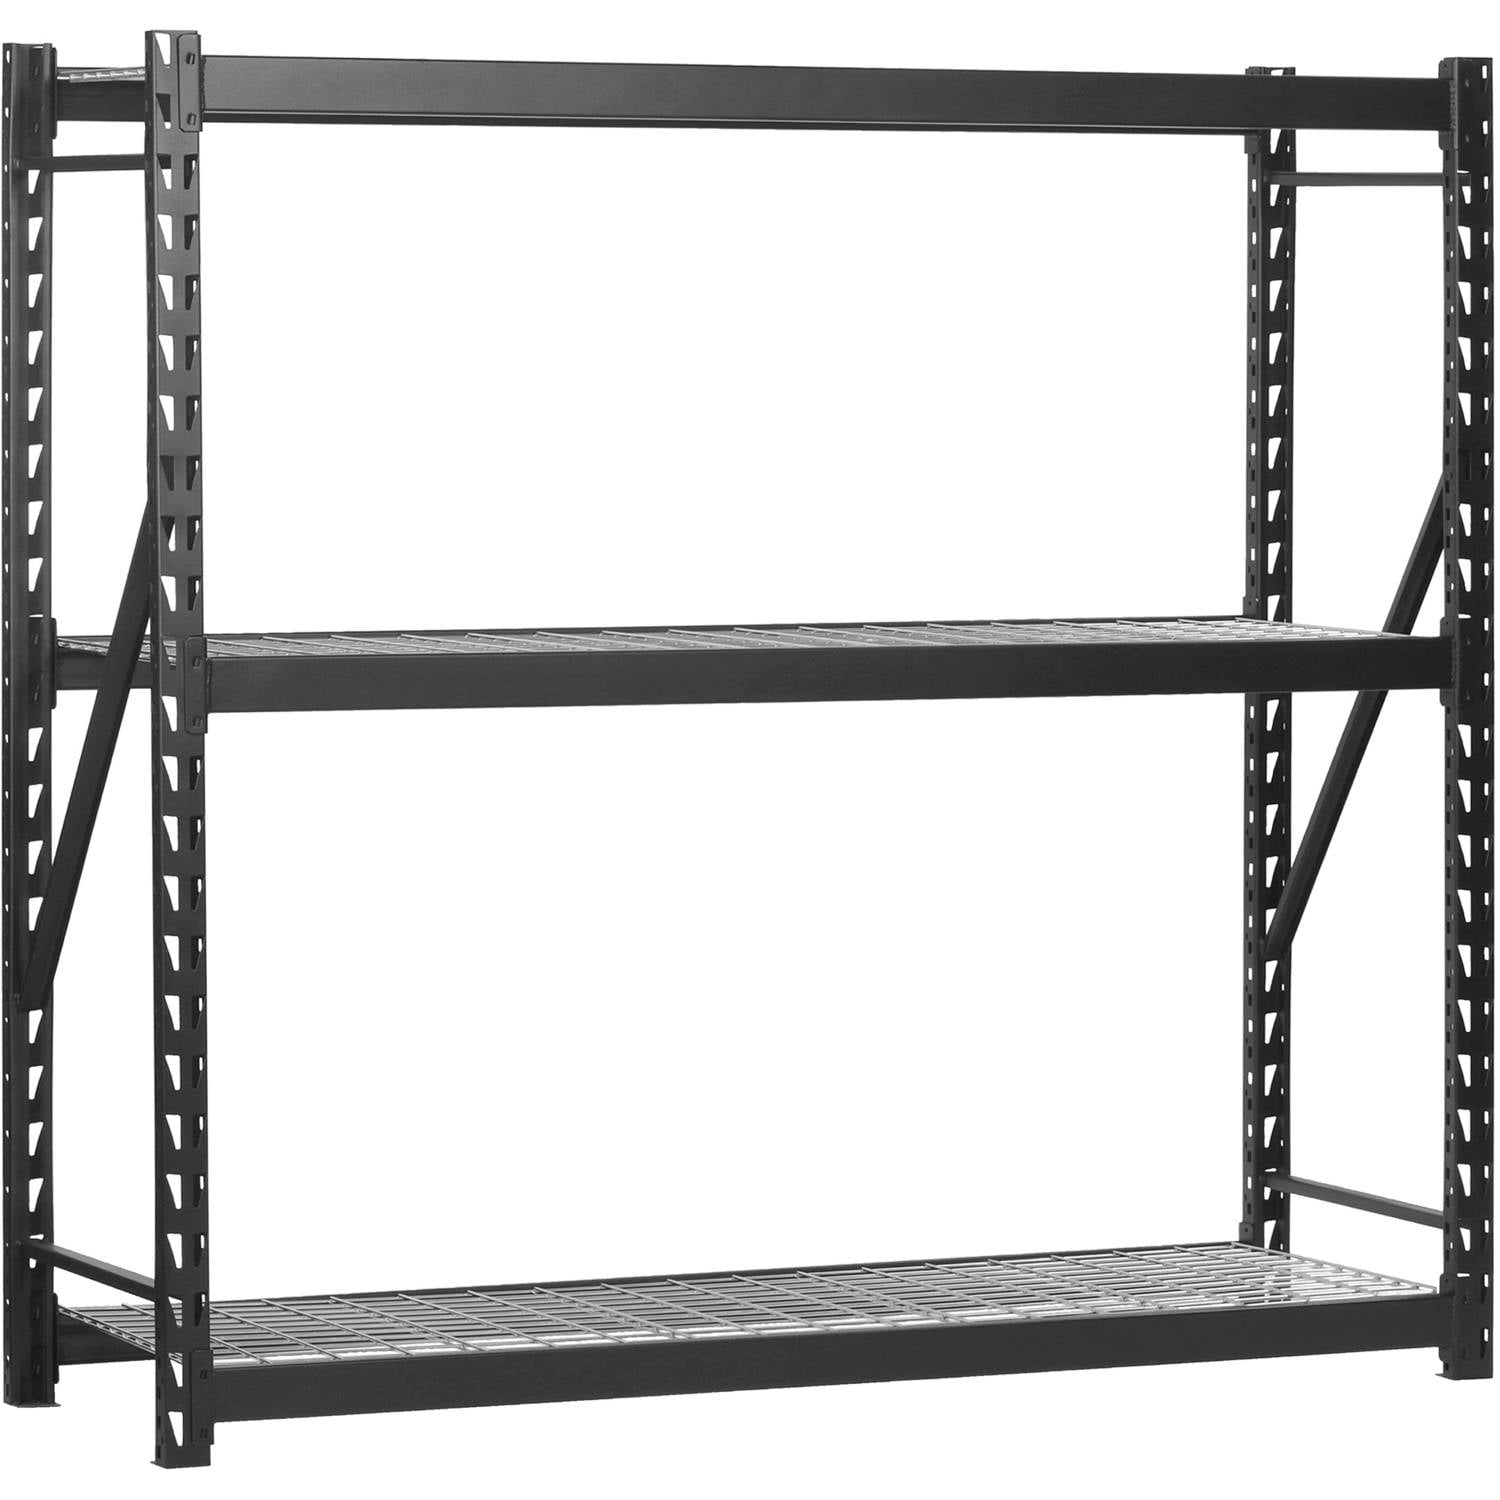 4-Tier Metal Storage Rack Industrial Welded Wire Shelf Shelving Units Black 